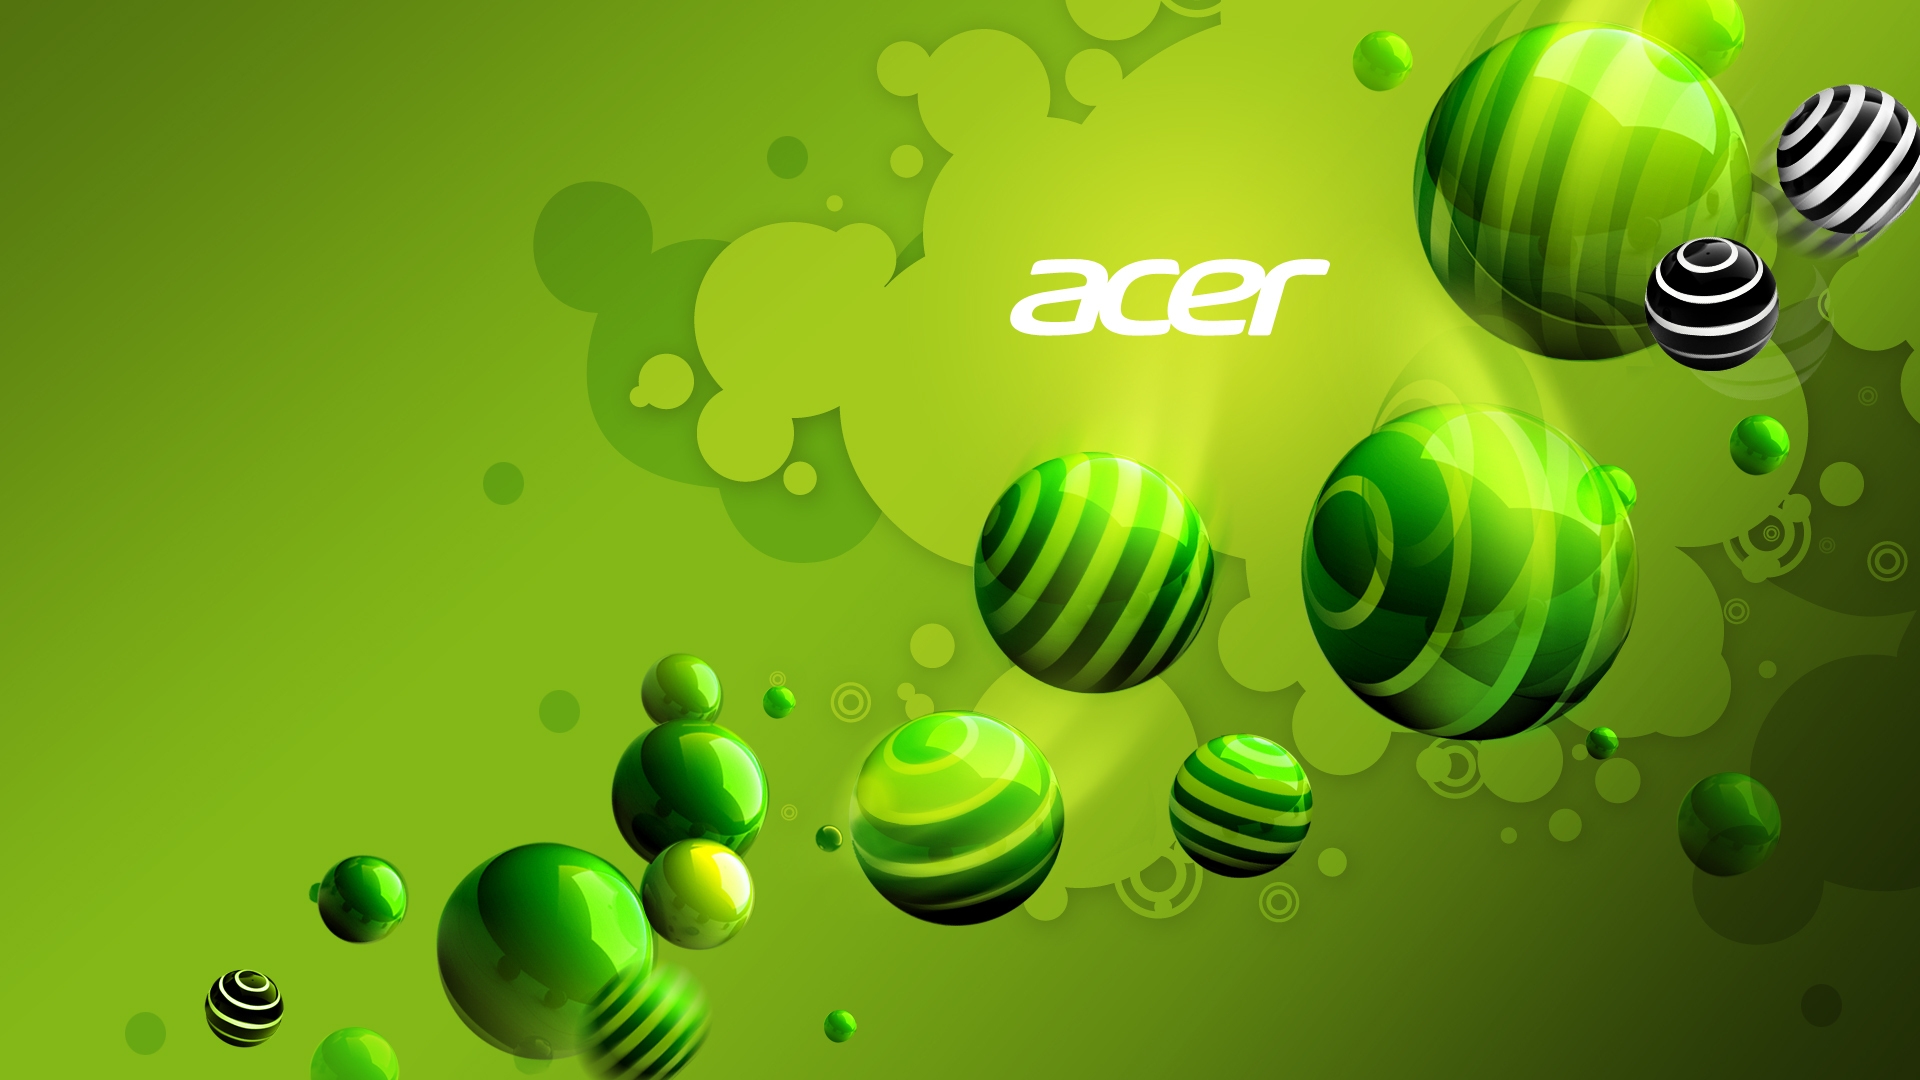 Acer Green World for 1920 x 1080 HDTV 1080p resolution